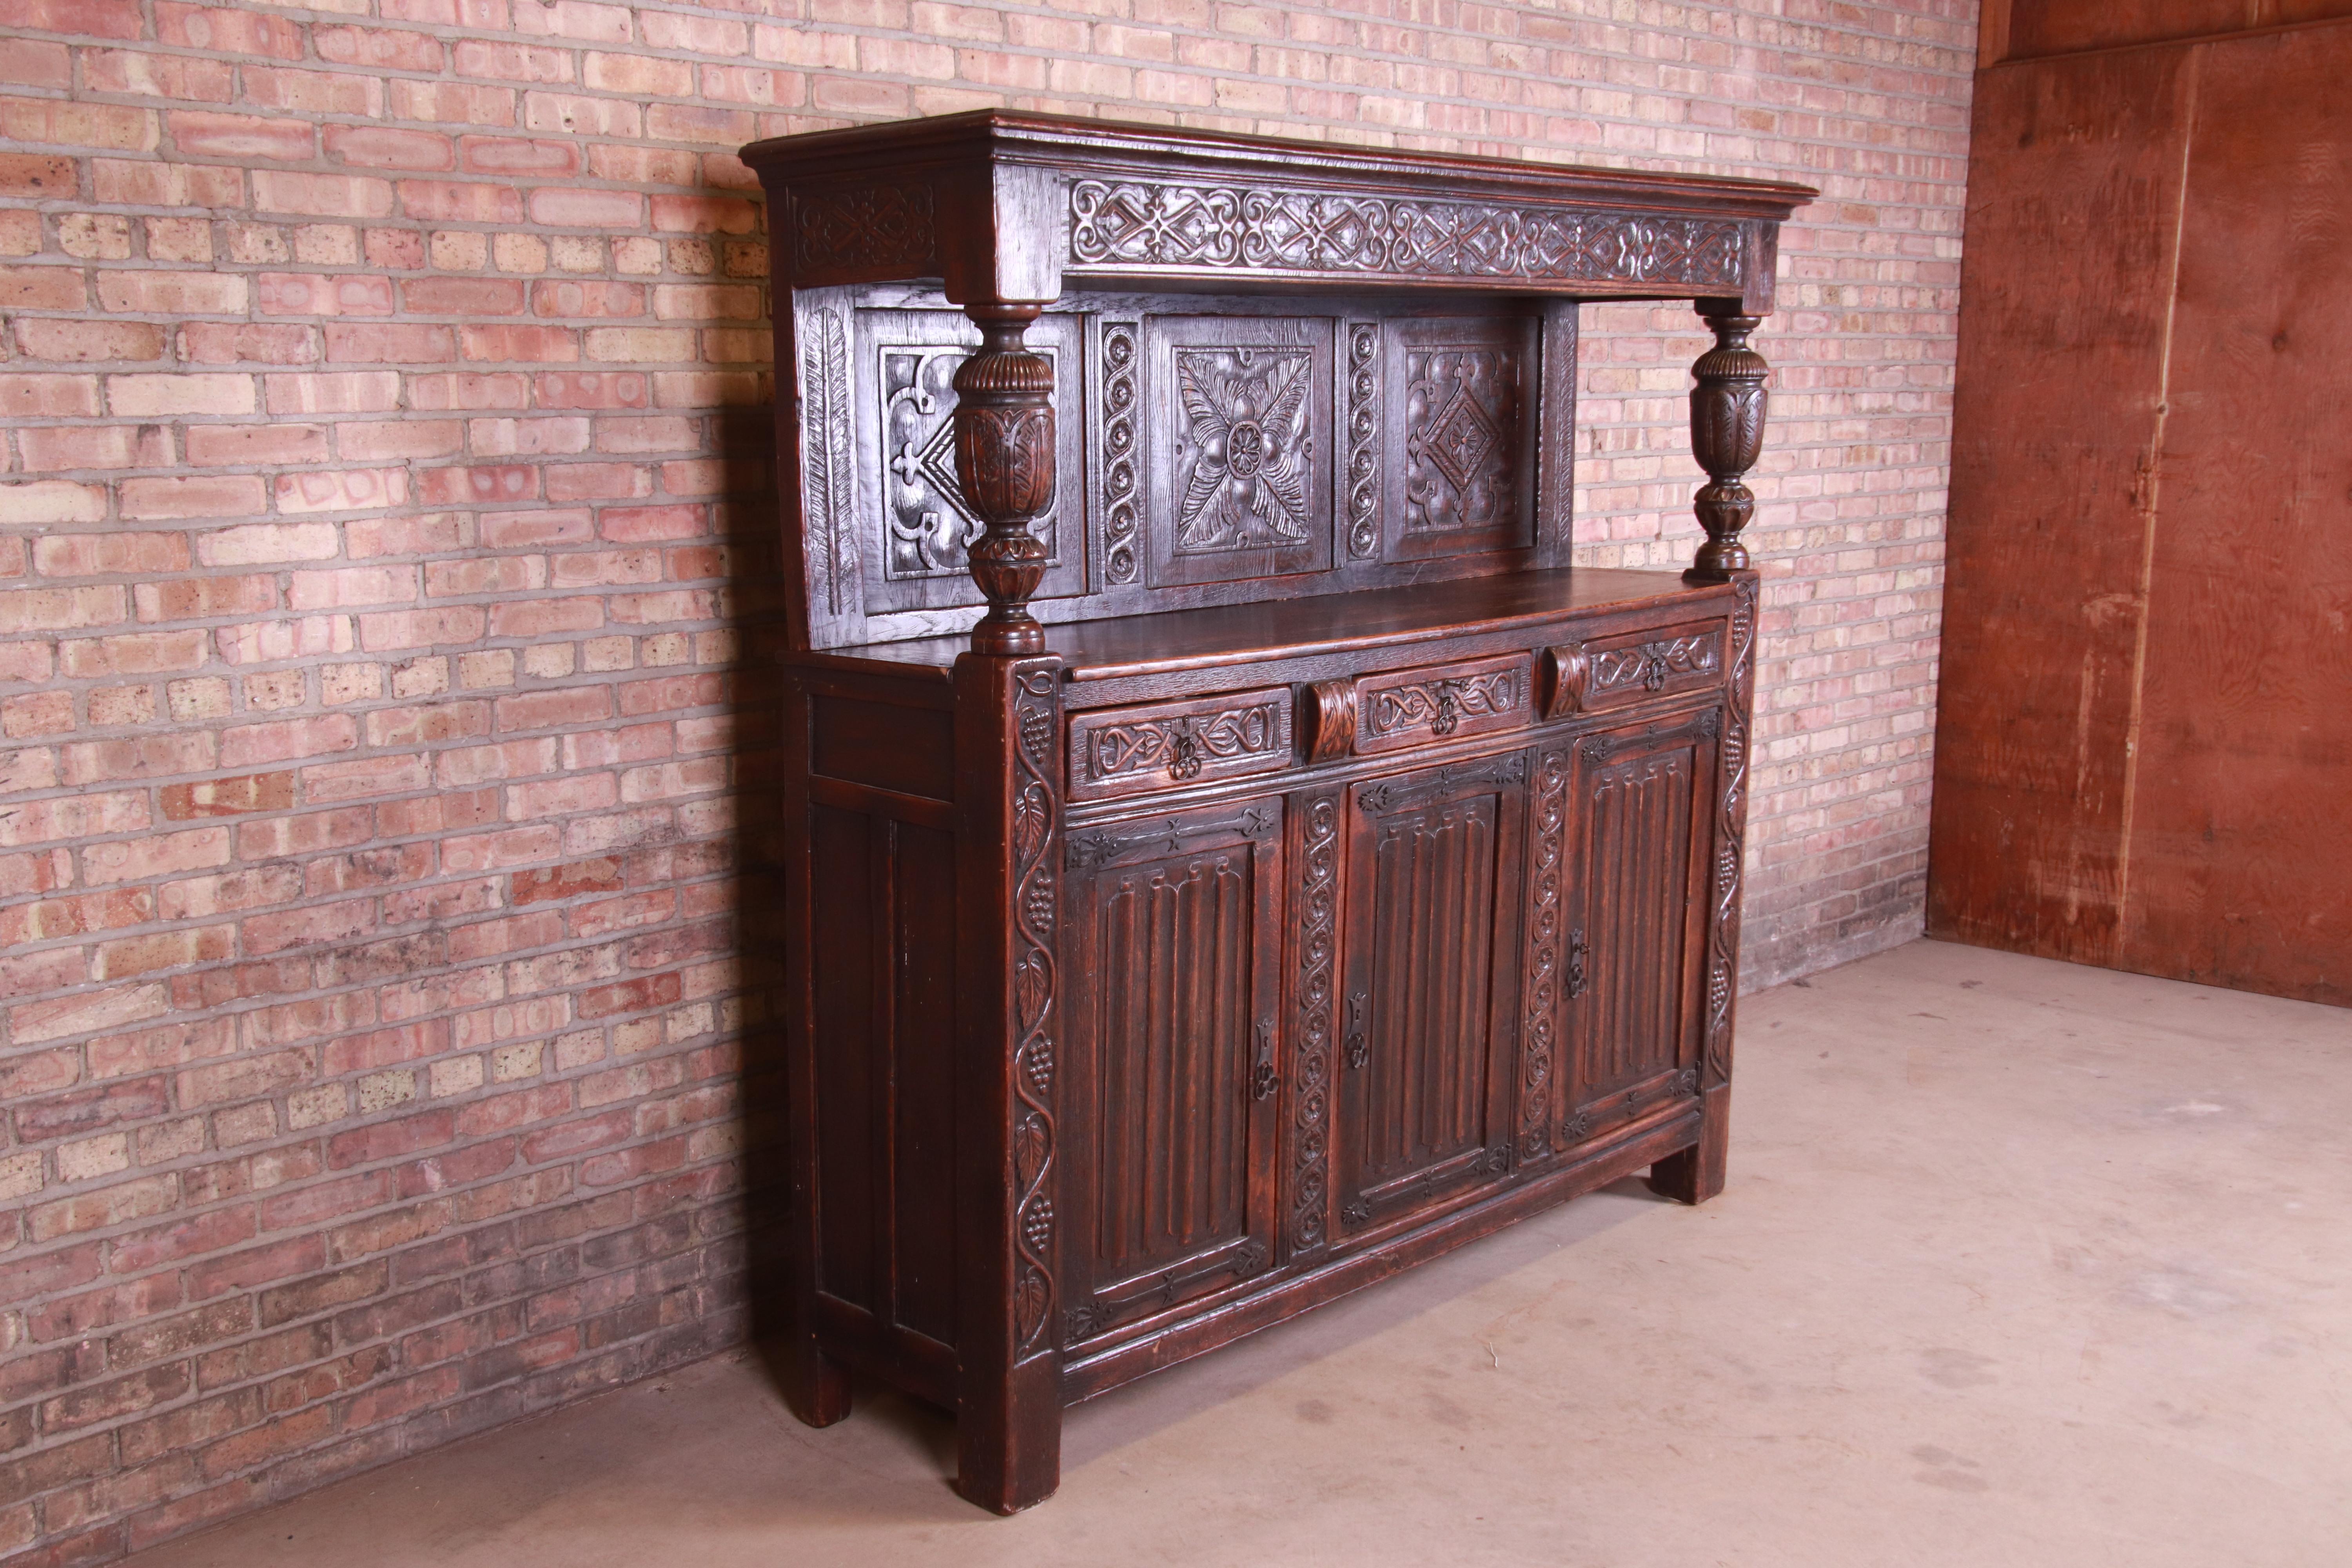 Renaissance Revival Antique Italian Ornate Carved Oak Sideboard or Bar Cabinet, circa 1800